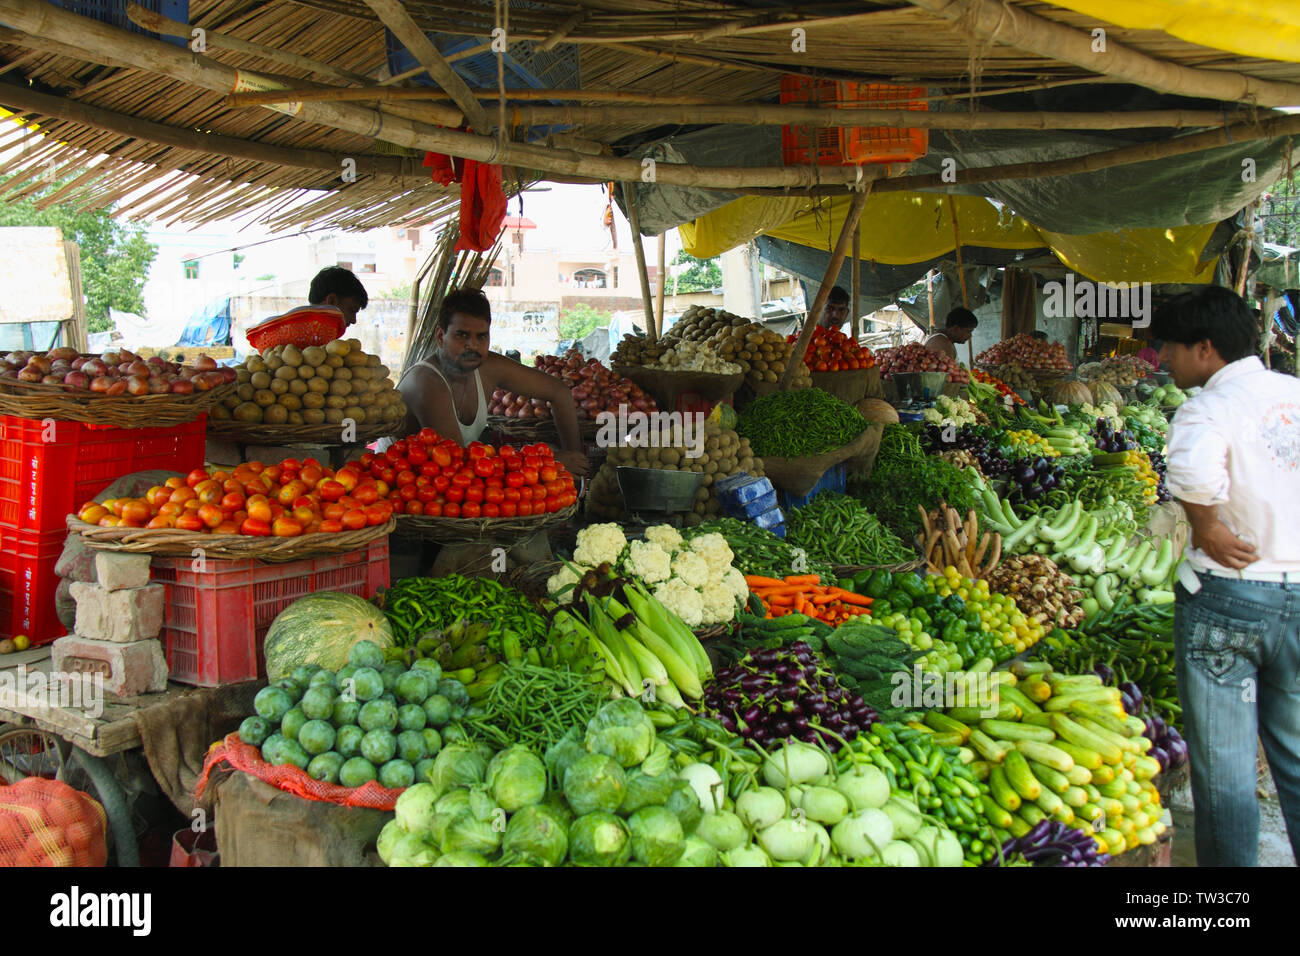 Vegetable stall, India Stock Photo